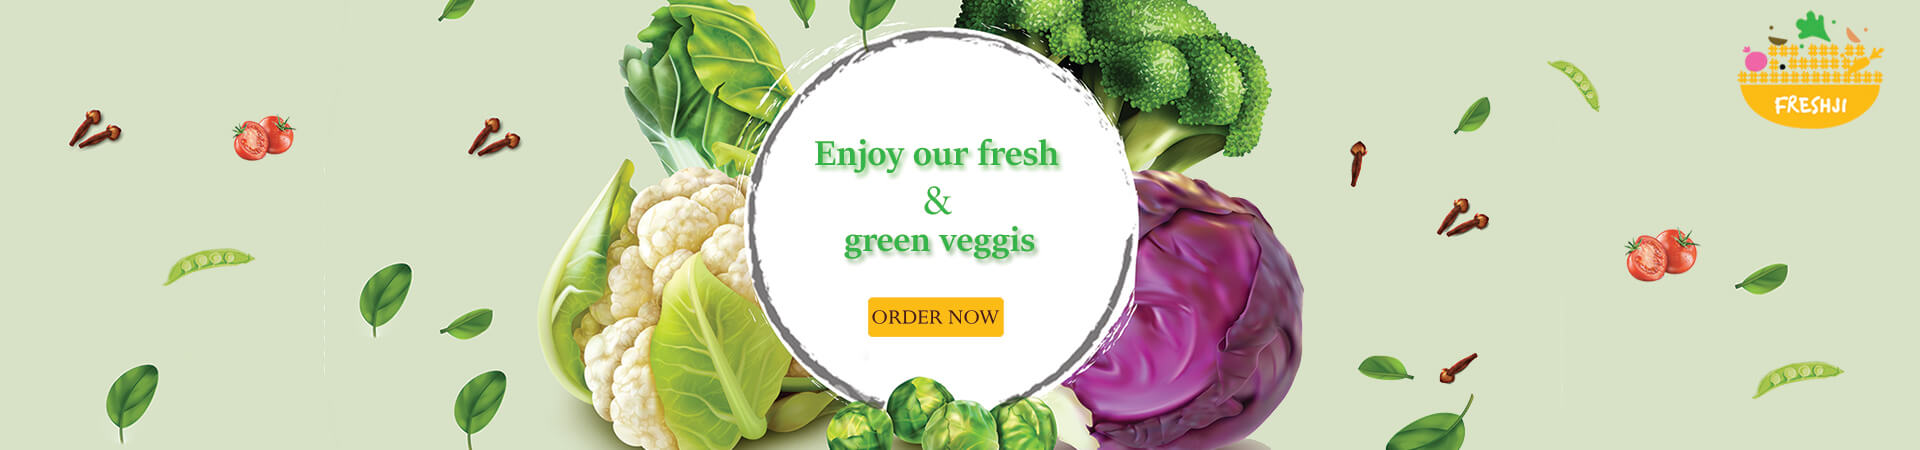 Fresh Green veggies